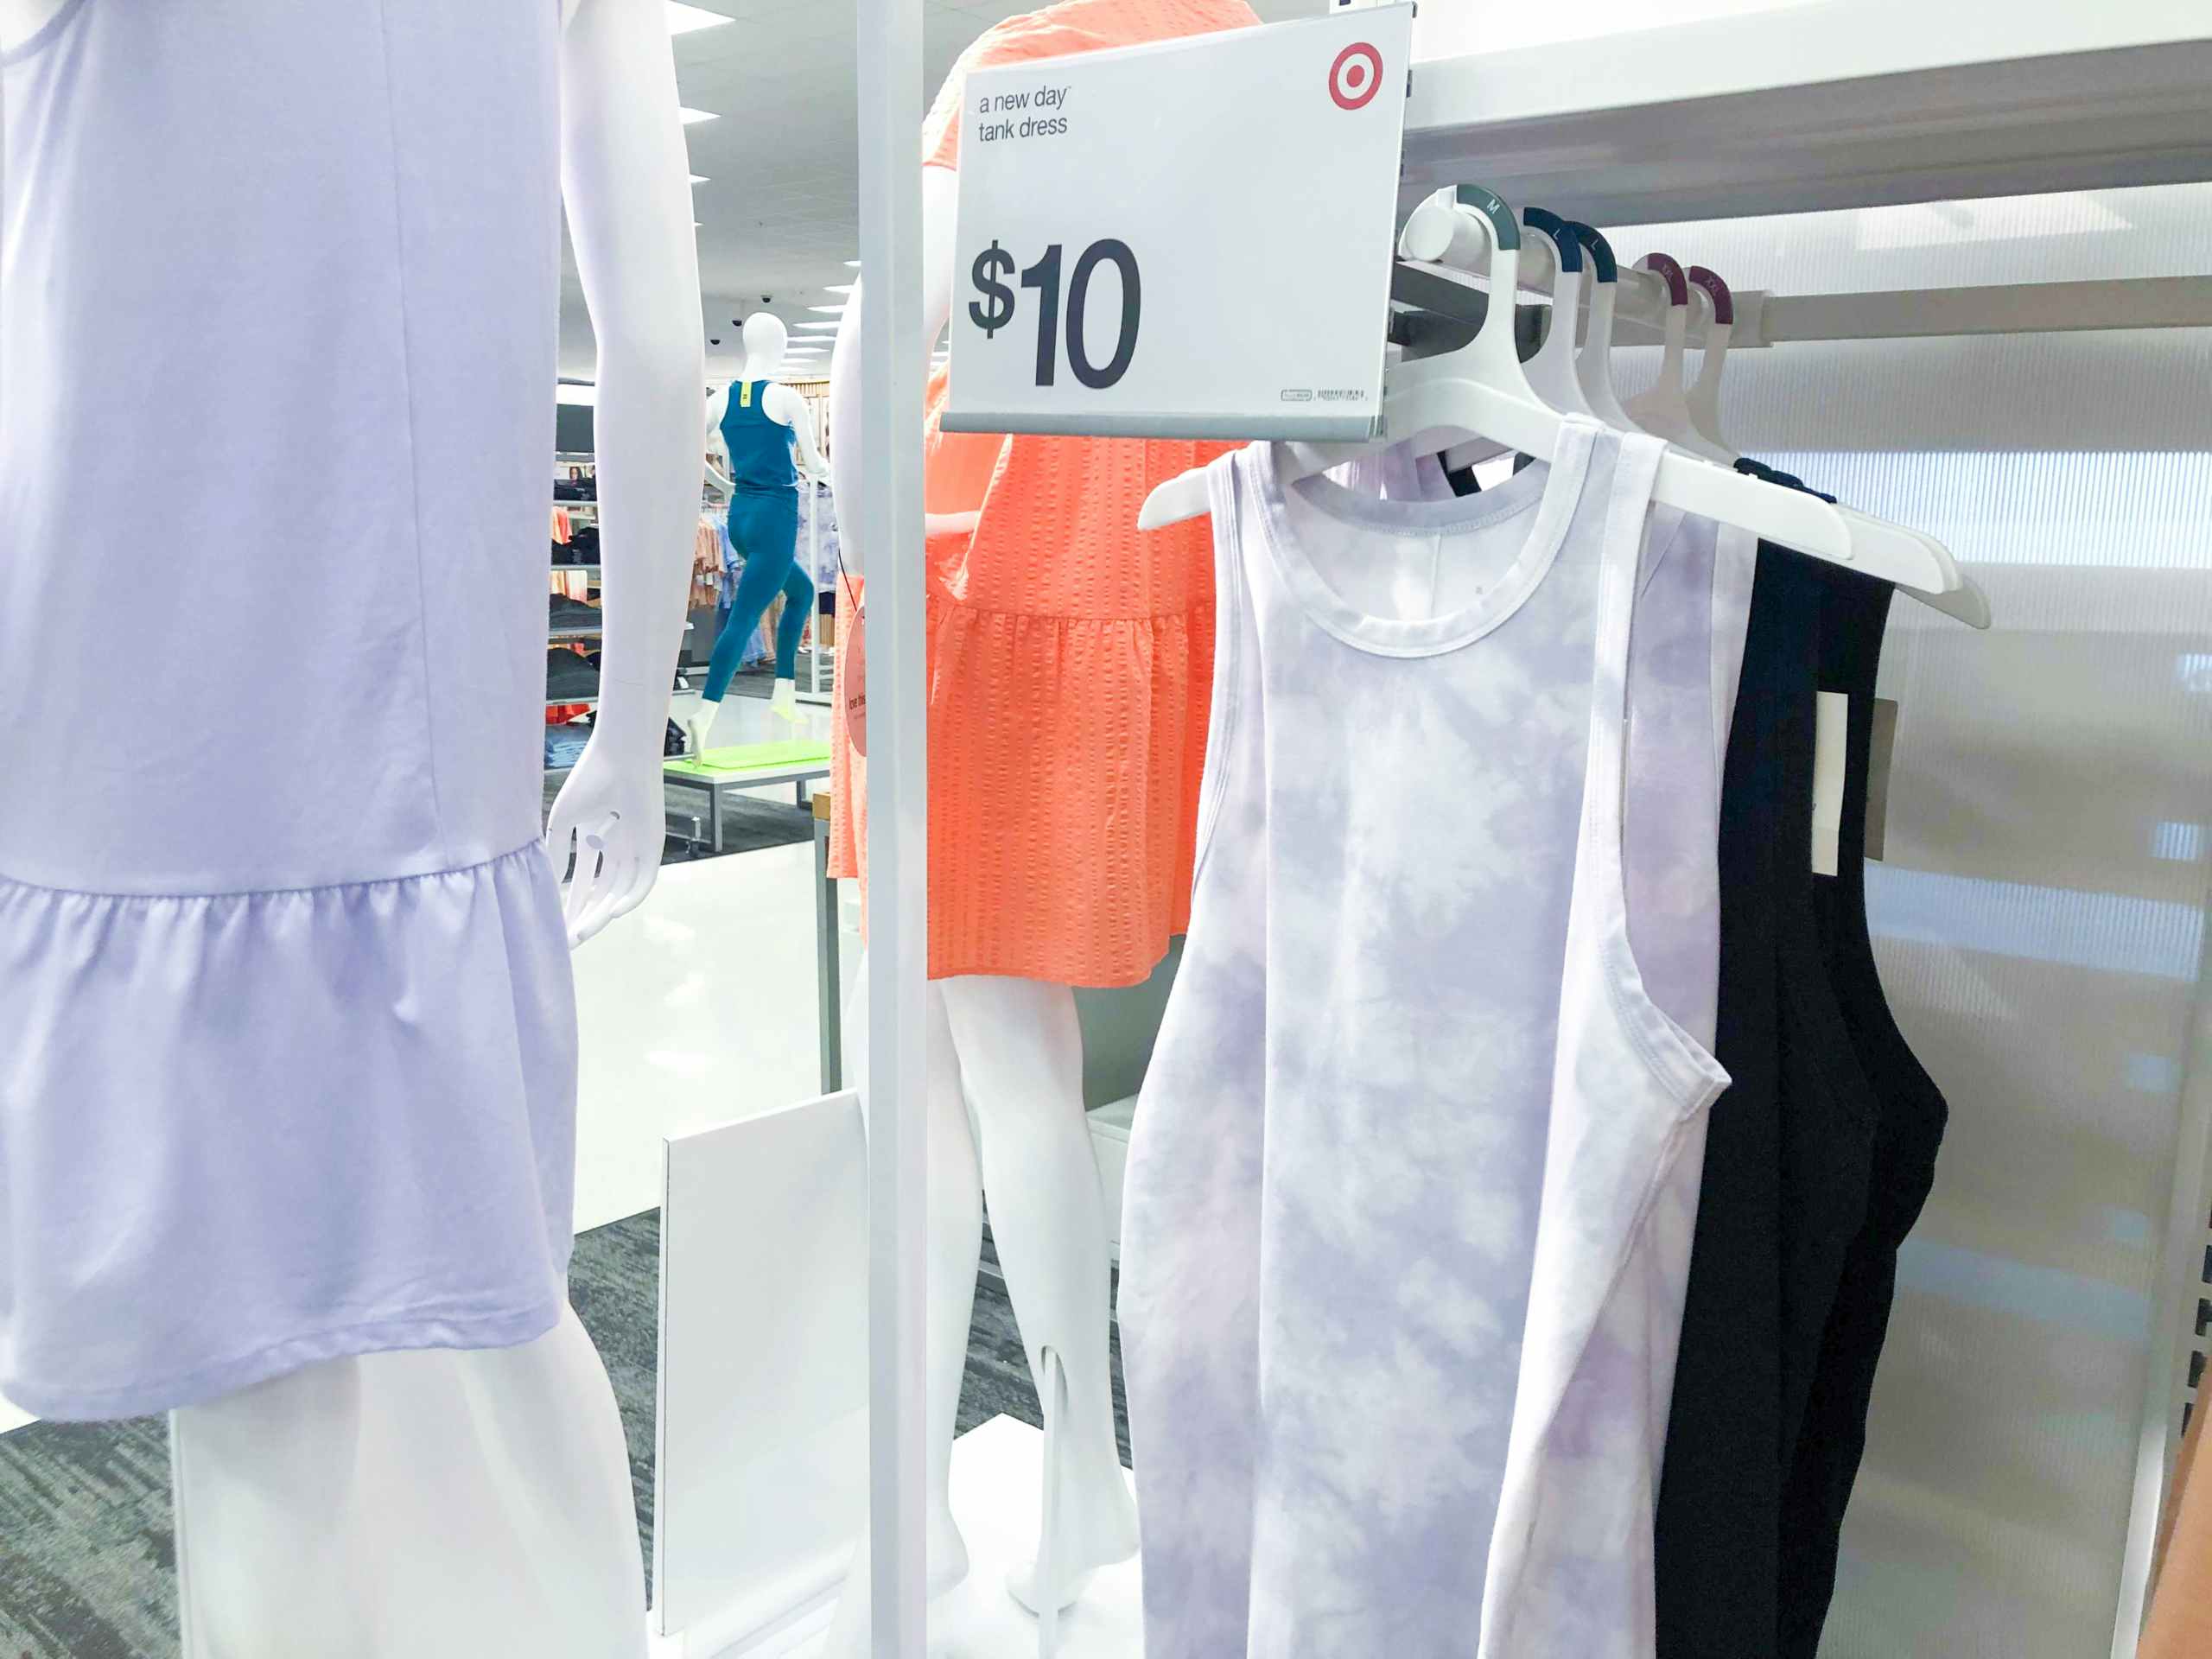 dresses hanging on hanger display at target